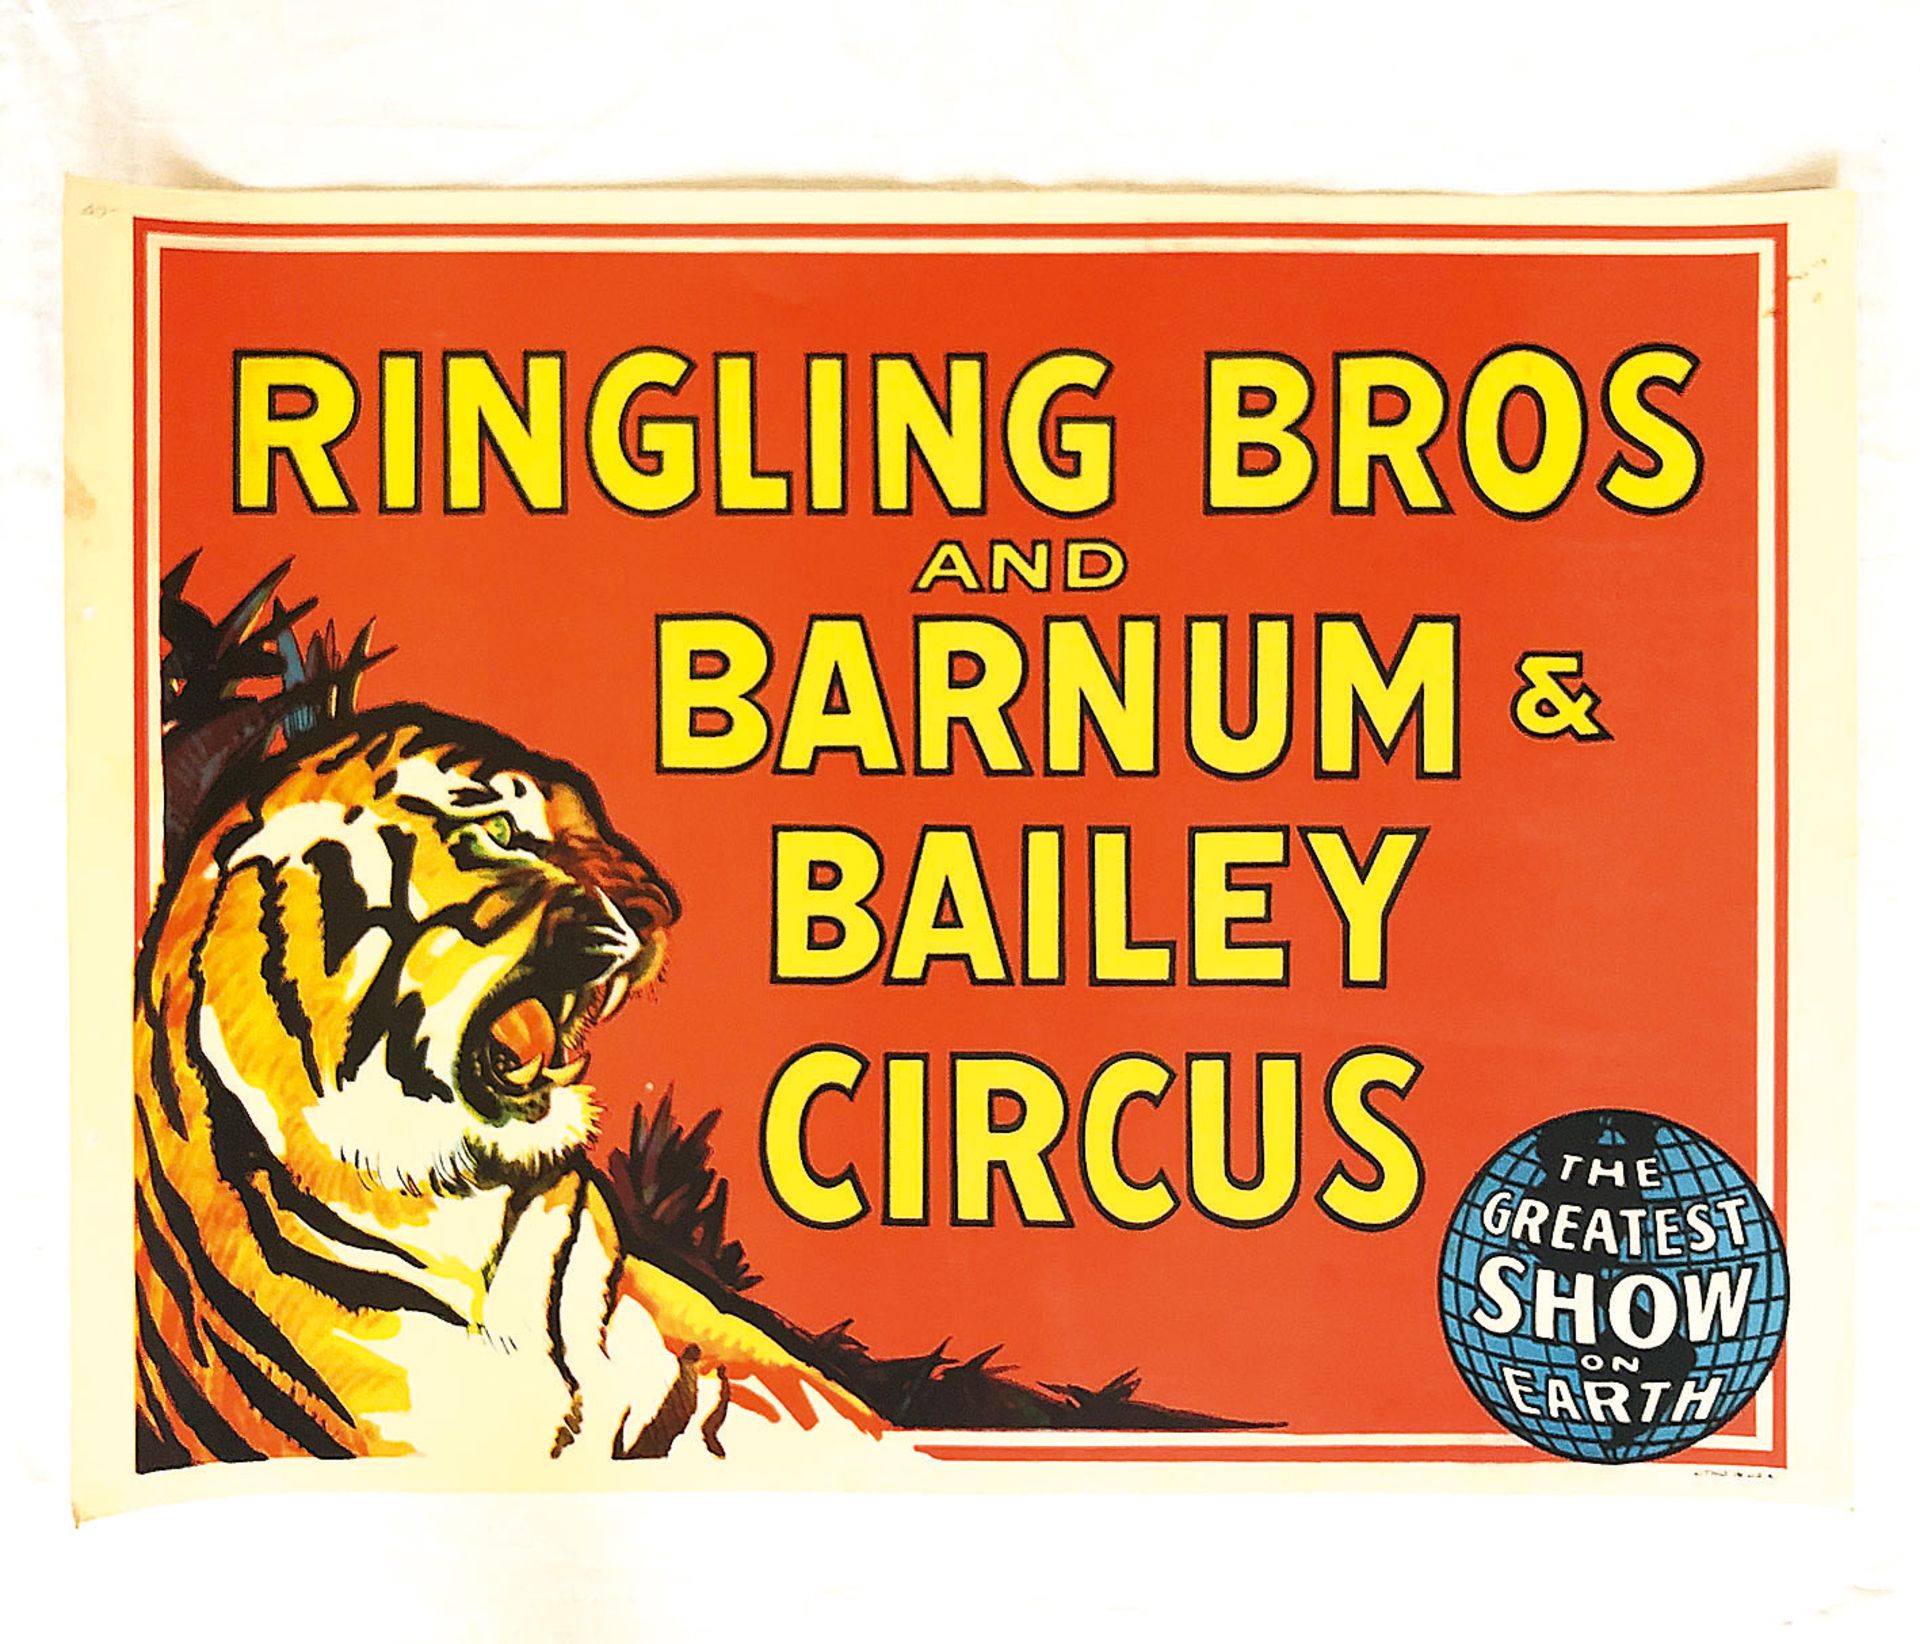 Ringling Bros and Barnum & Bailey Circus Poster ca. 1940-1950 